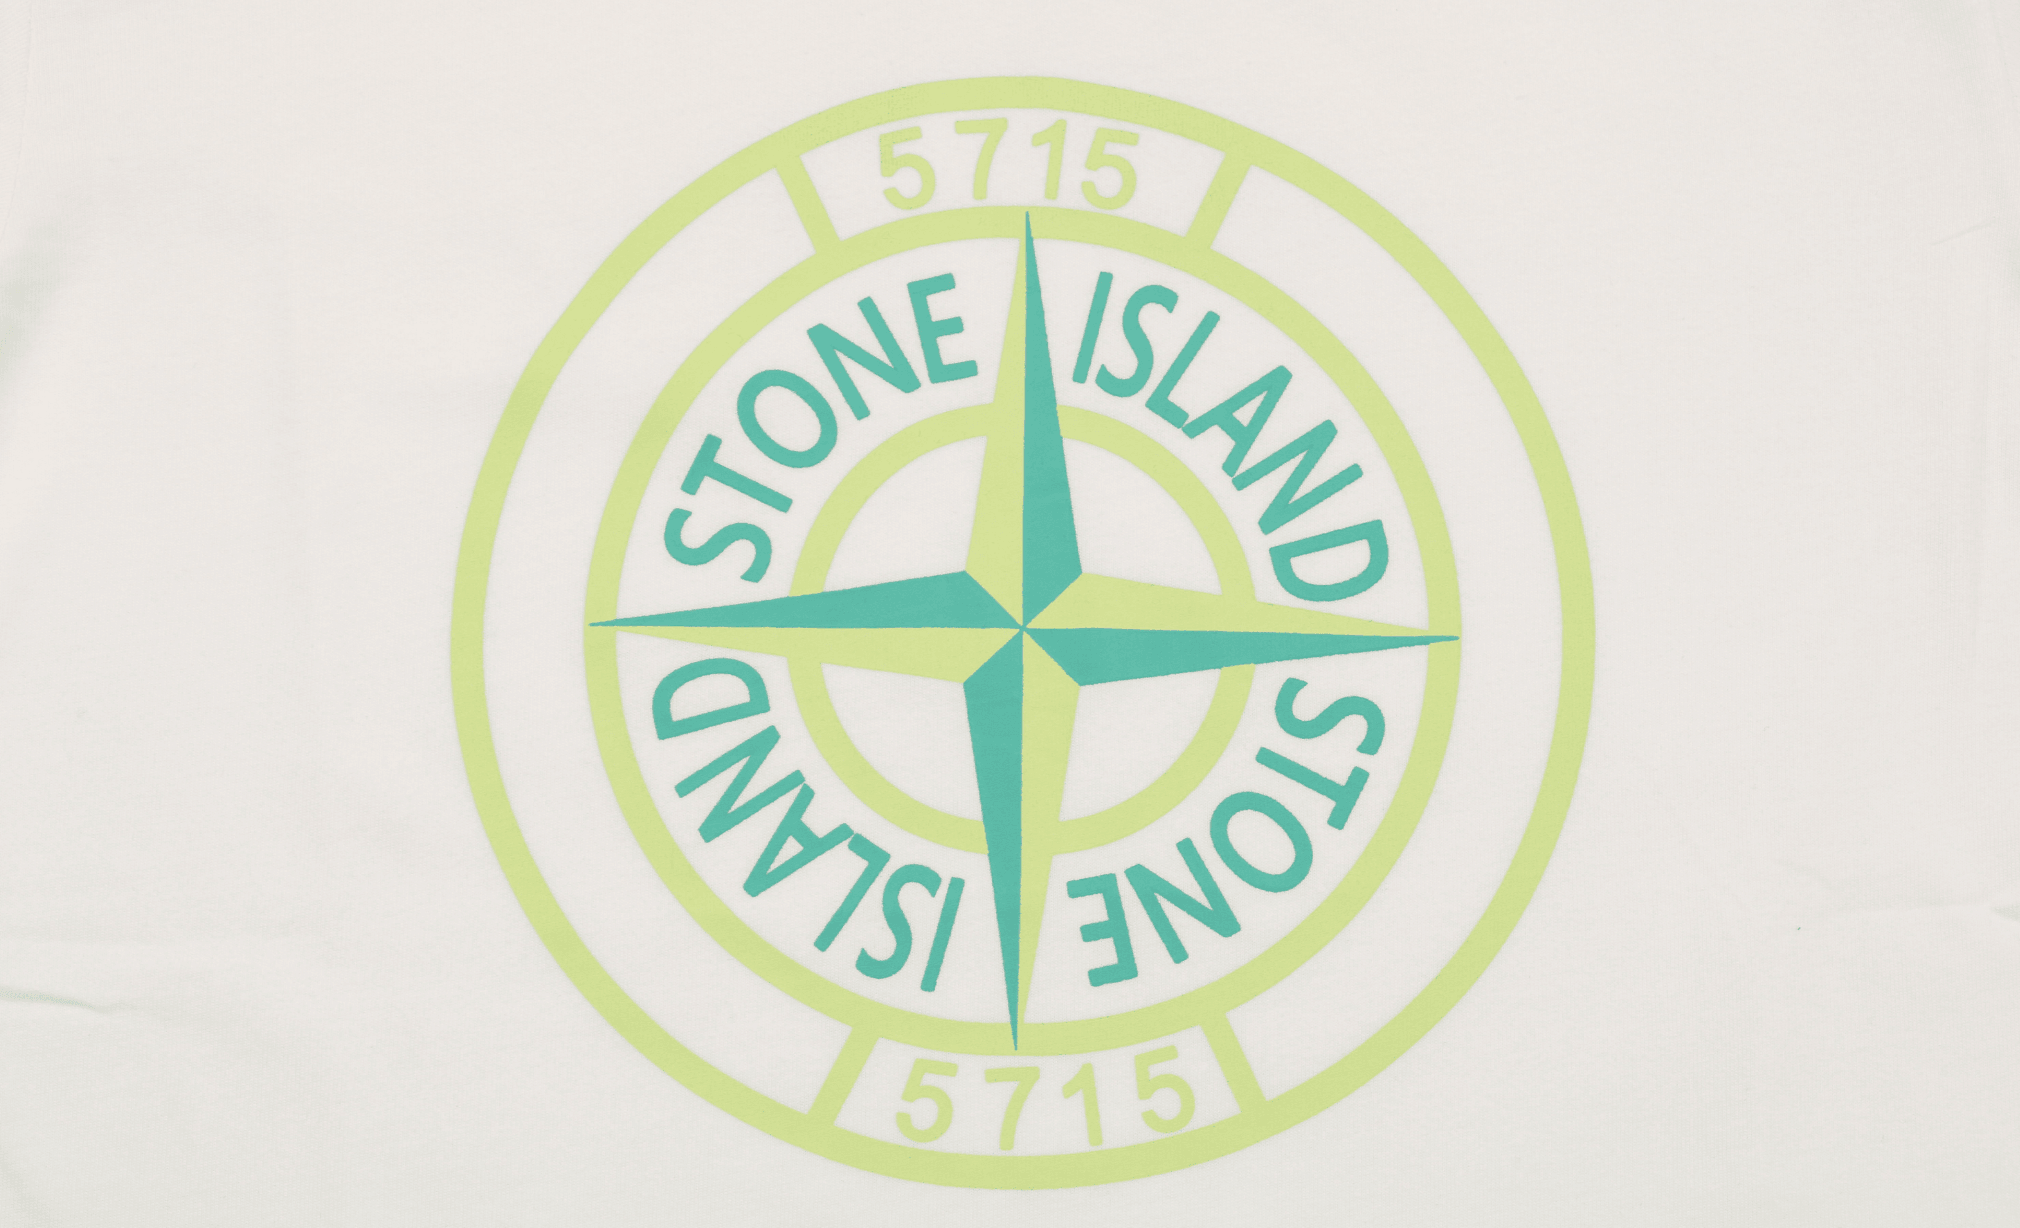 STONE ISLAND 21ss *WHITE*